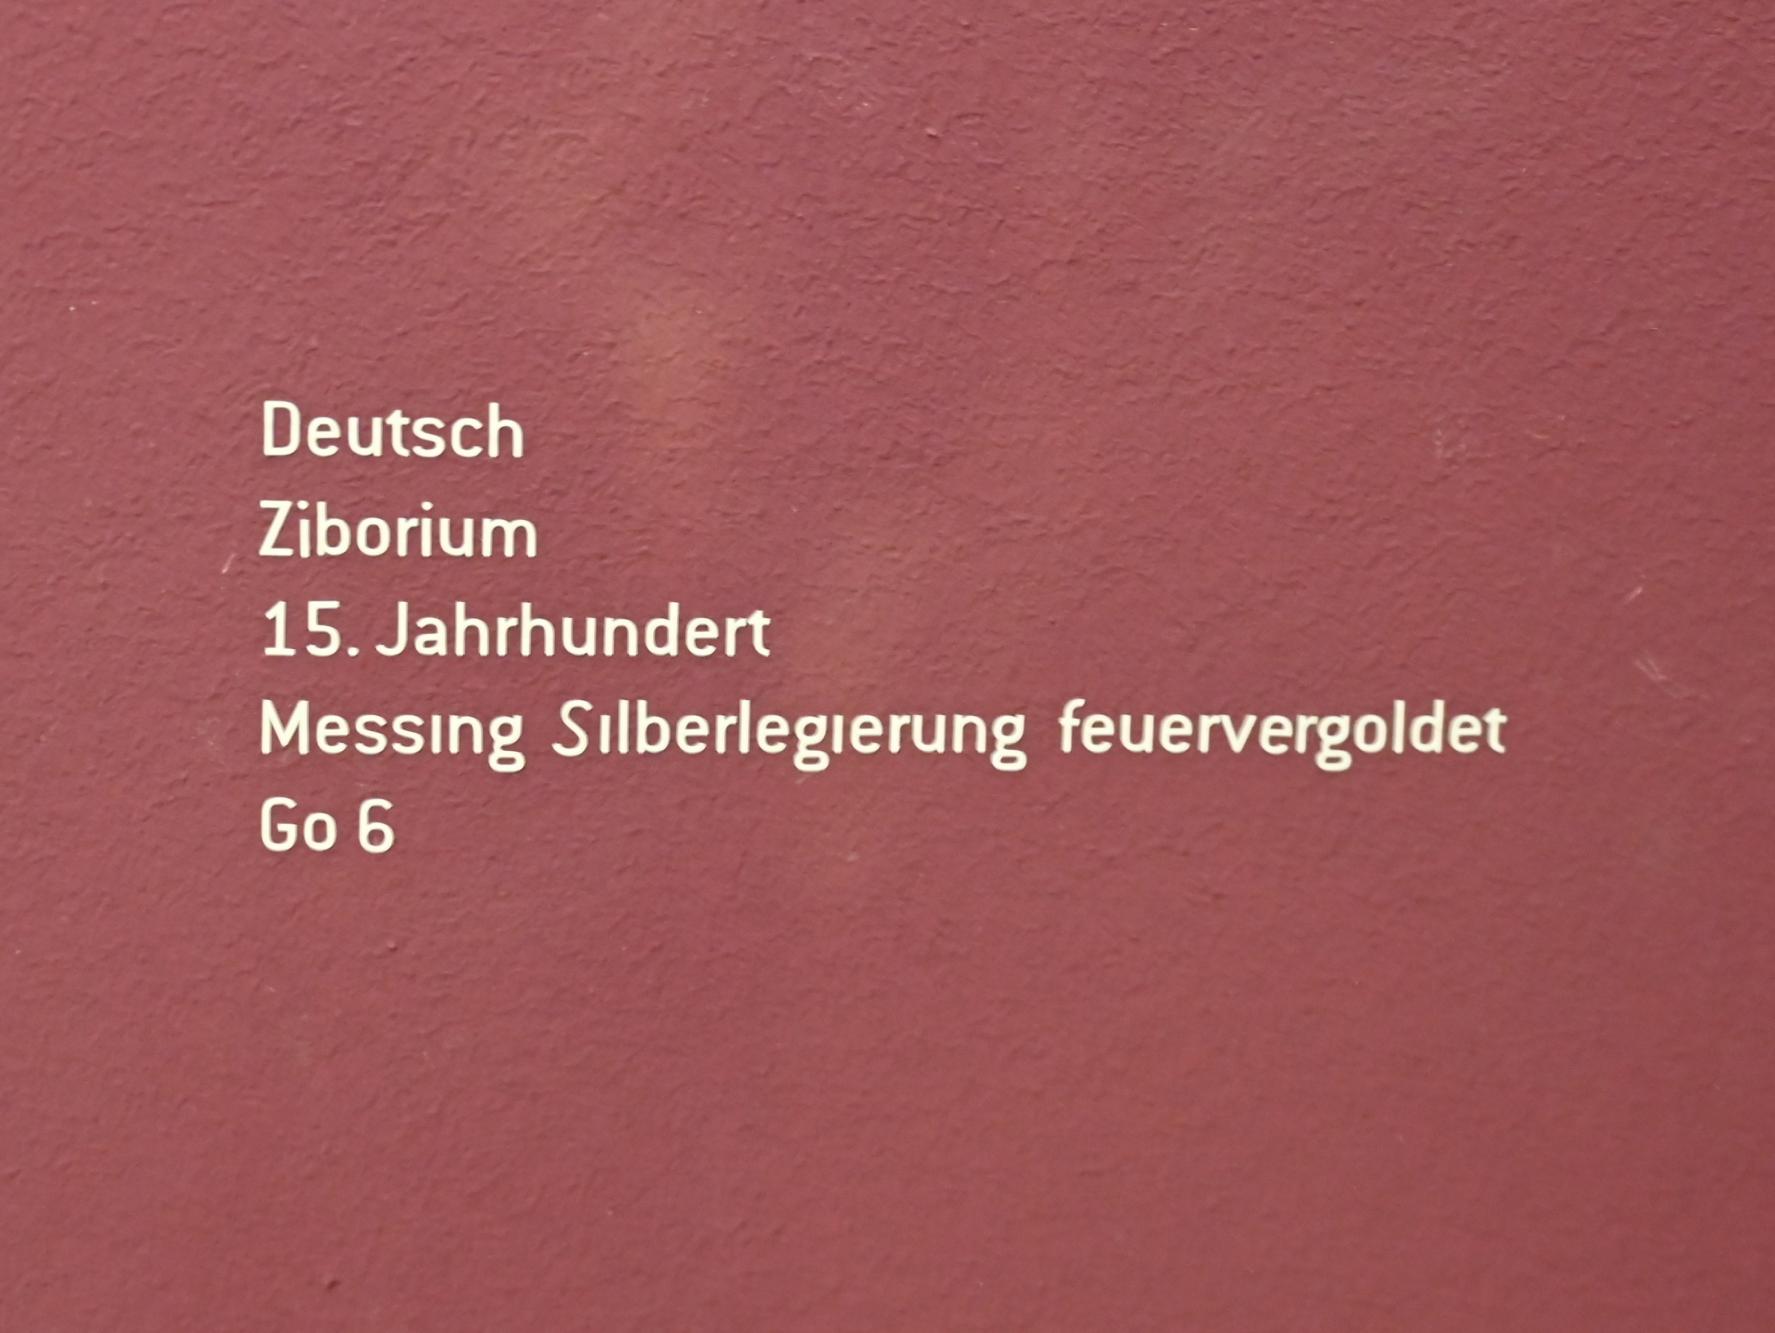 Ziborium, Innsbruck, Tiroler Landesmuseum, Ferdinandeum, Mittelalter 2, 15. Jhd., Bild 2/2